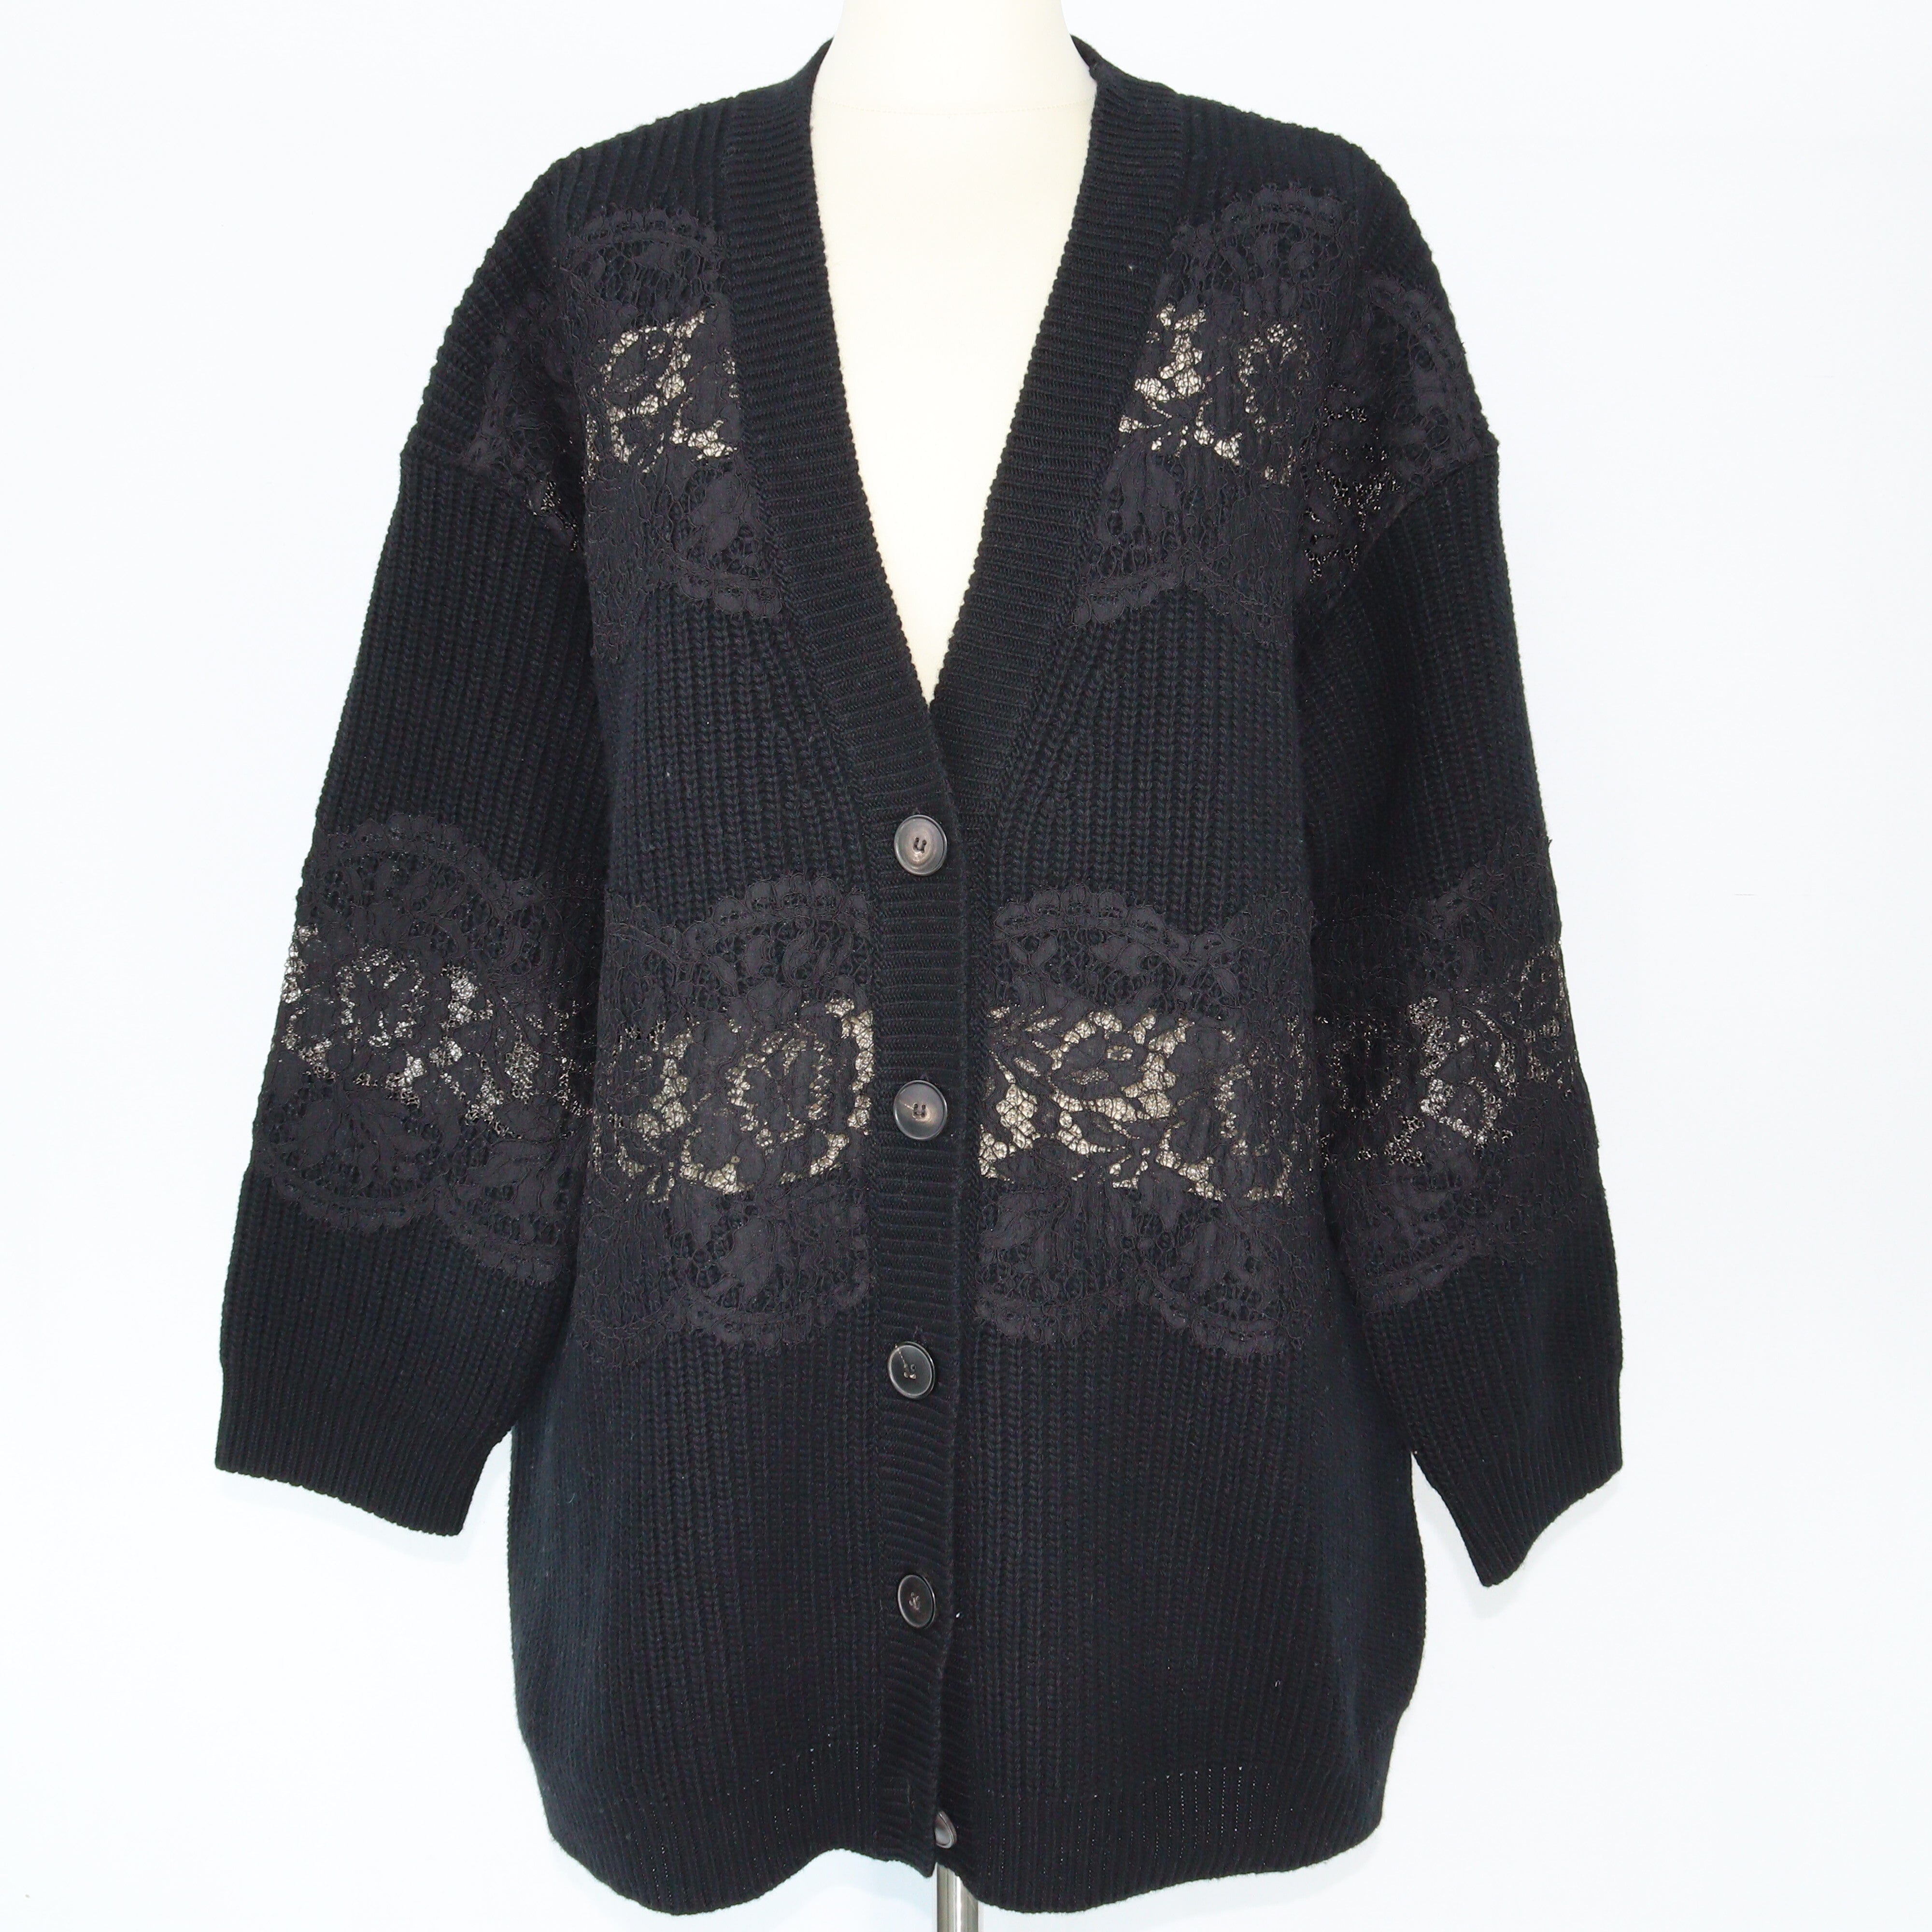 Black Lace Detailed Cardigan Clothings Valentino 